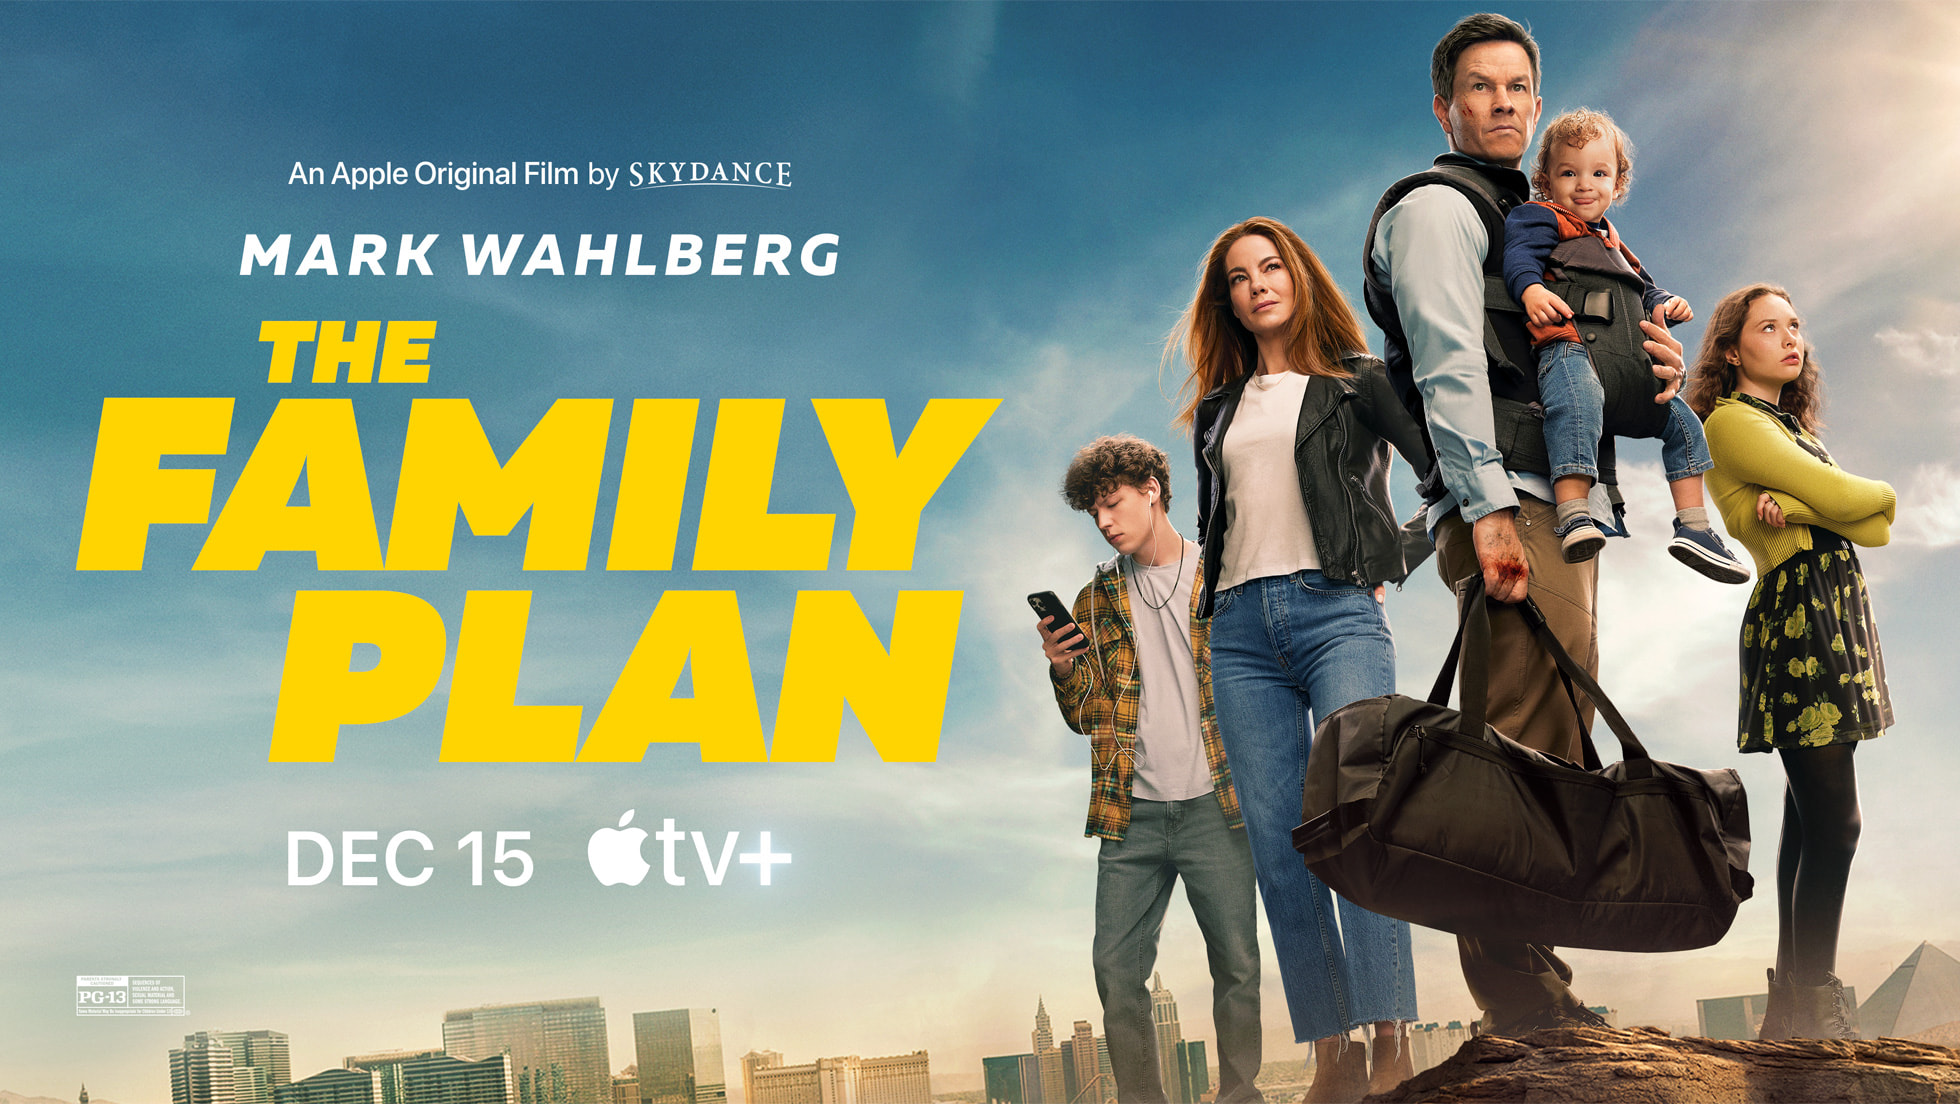 Apple Original Films unveils trailer for “The Family Plan”